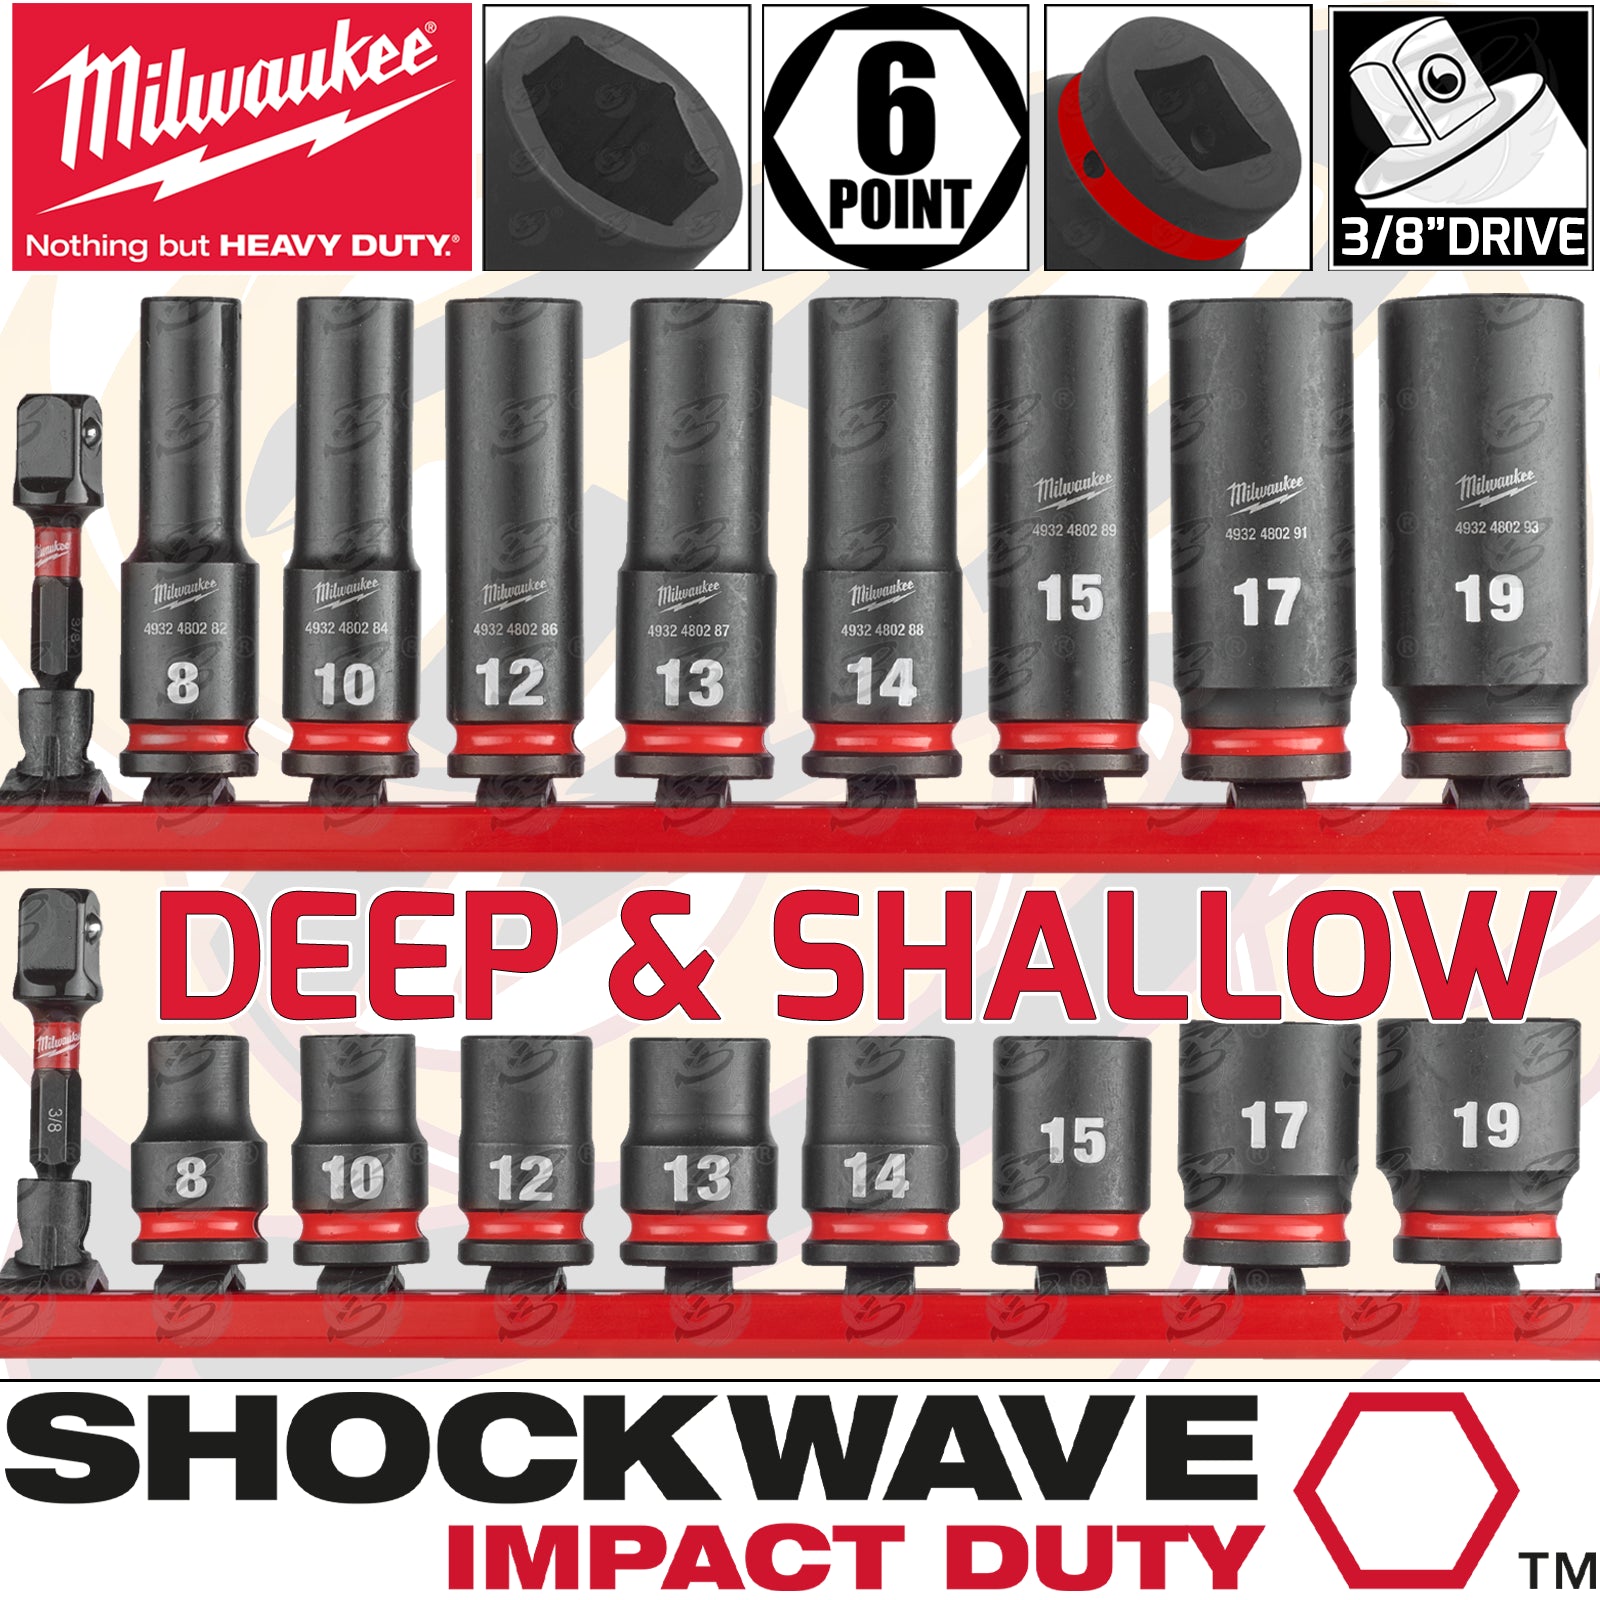 MILWAUKEE 18PCS 3/8" DRIVE 6 POINT DEEP & SHALLOW IMPACT SOCKETS 8MM - 19MM ( SHOCKWAVE IMPACT DUTY )